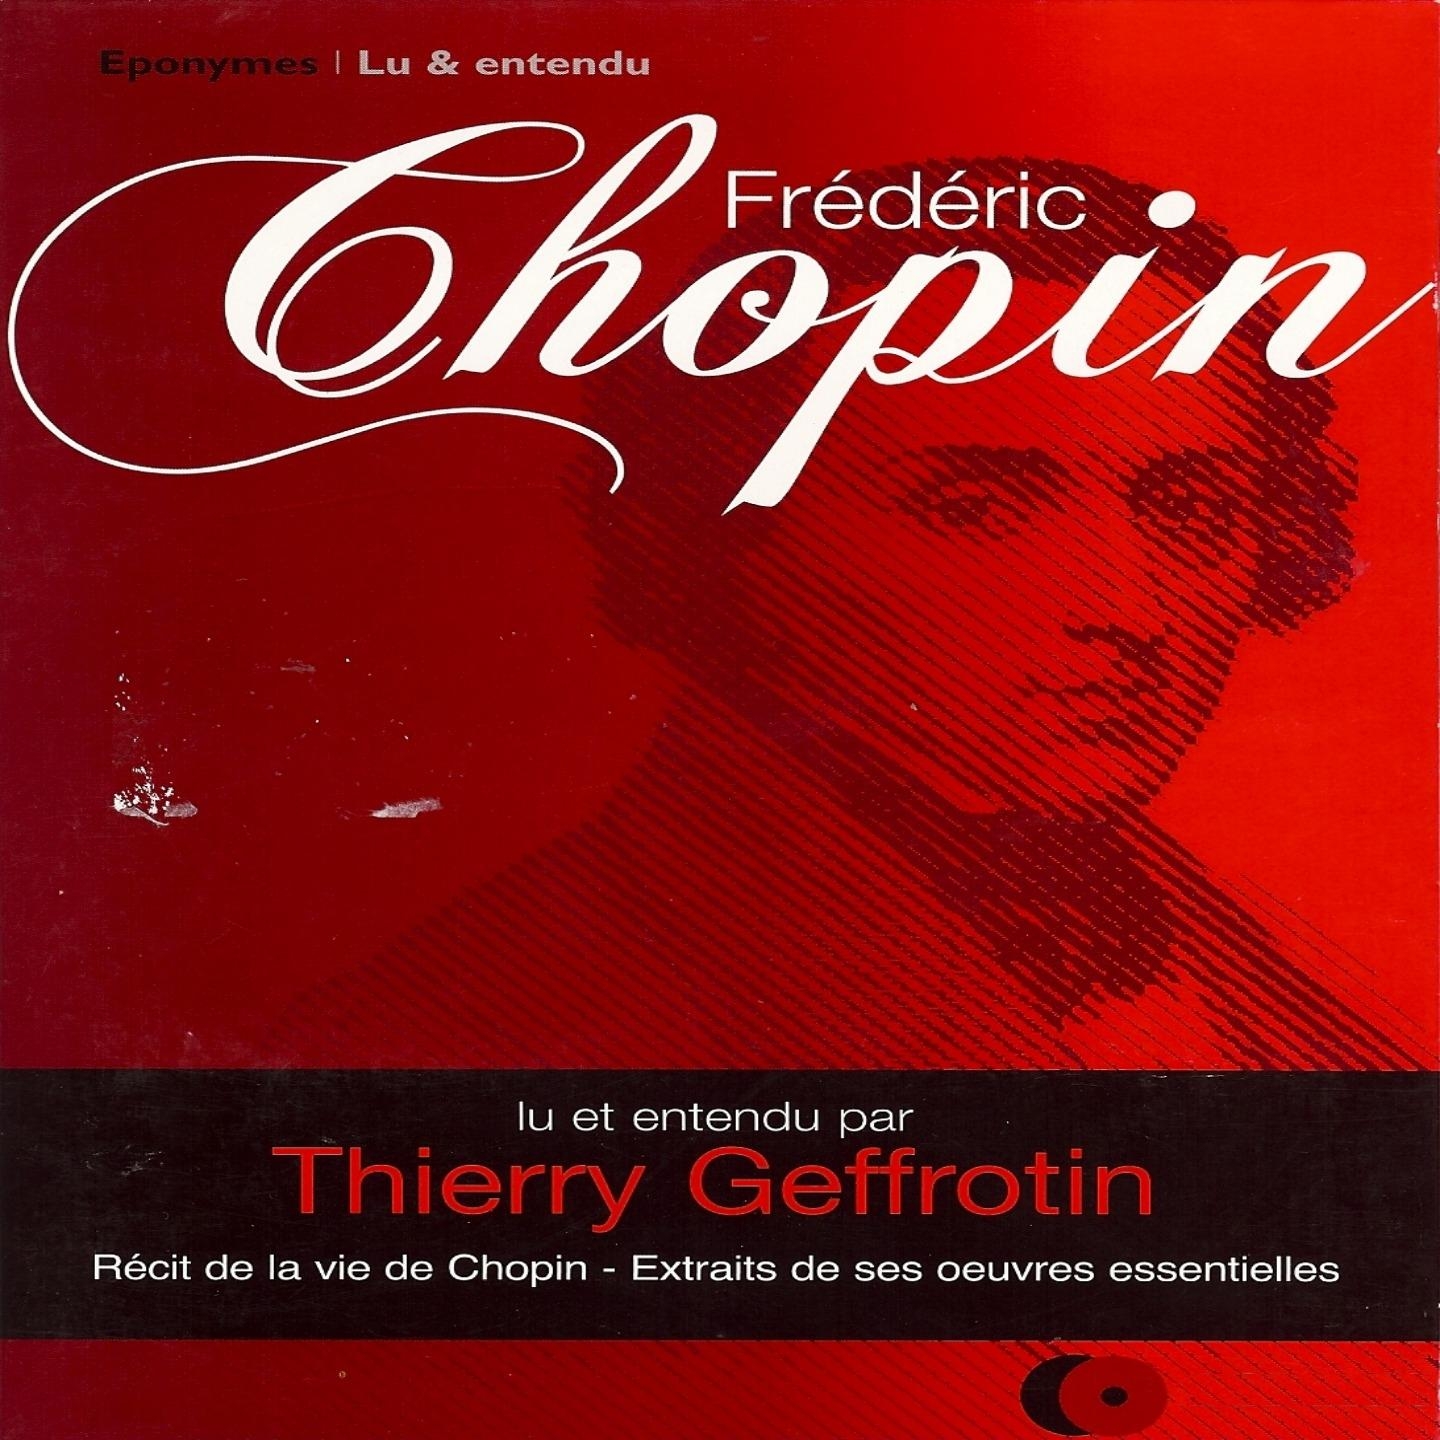 Re cit de la vie de Chopin